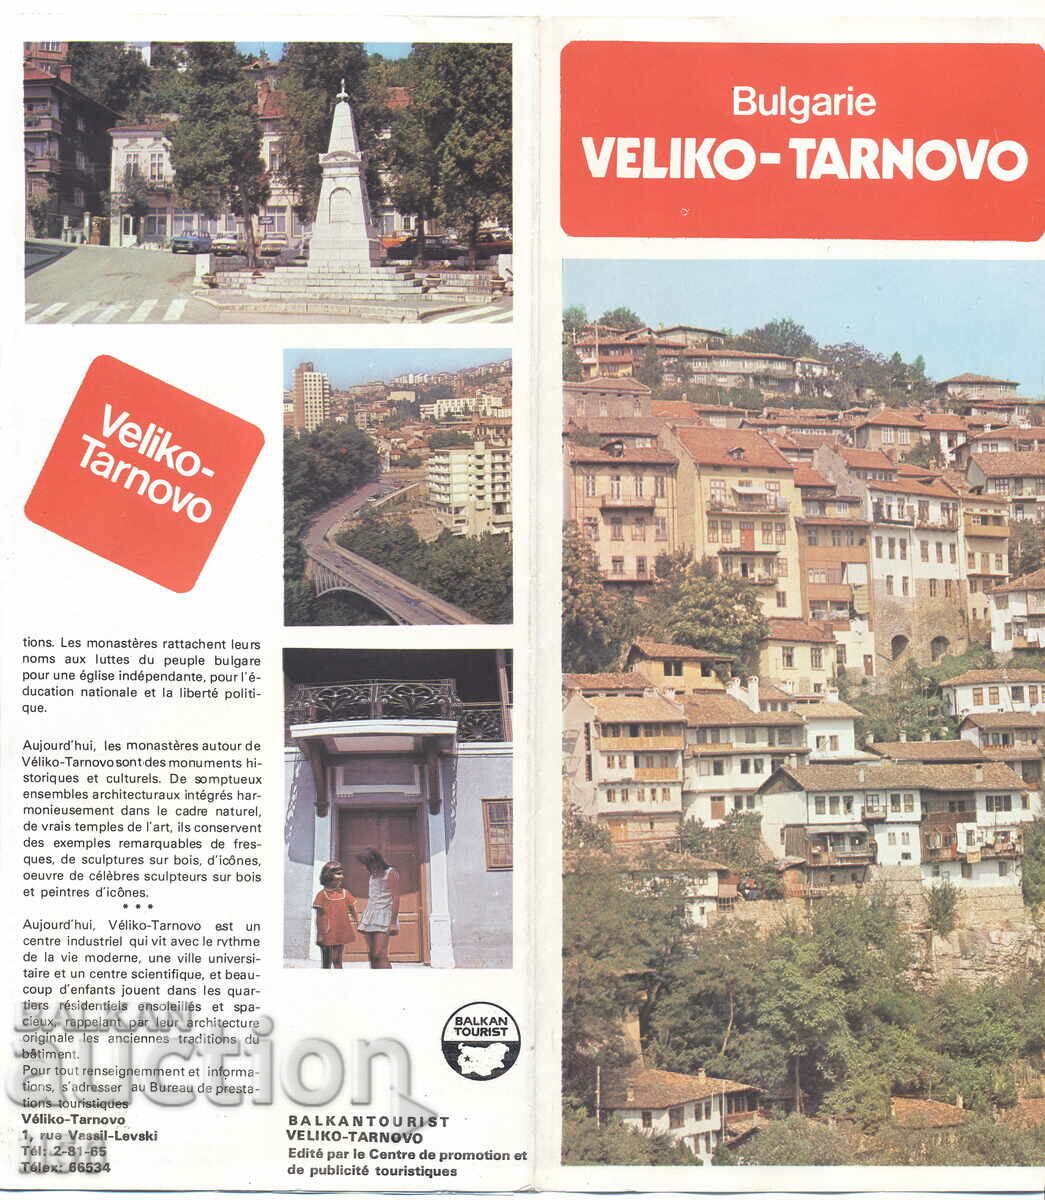 Diplyana - Veliko Tarnovo - Balkantourist aprox. 1980